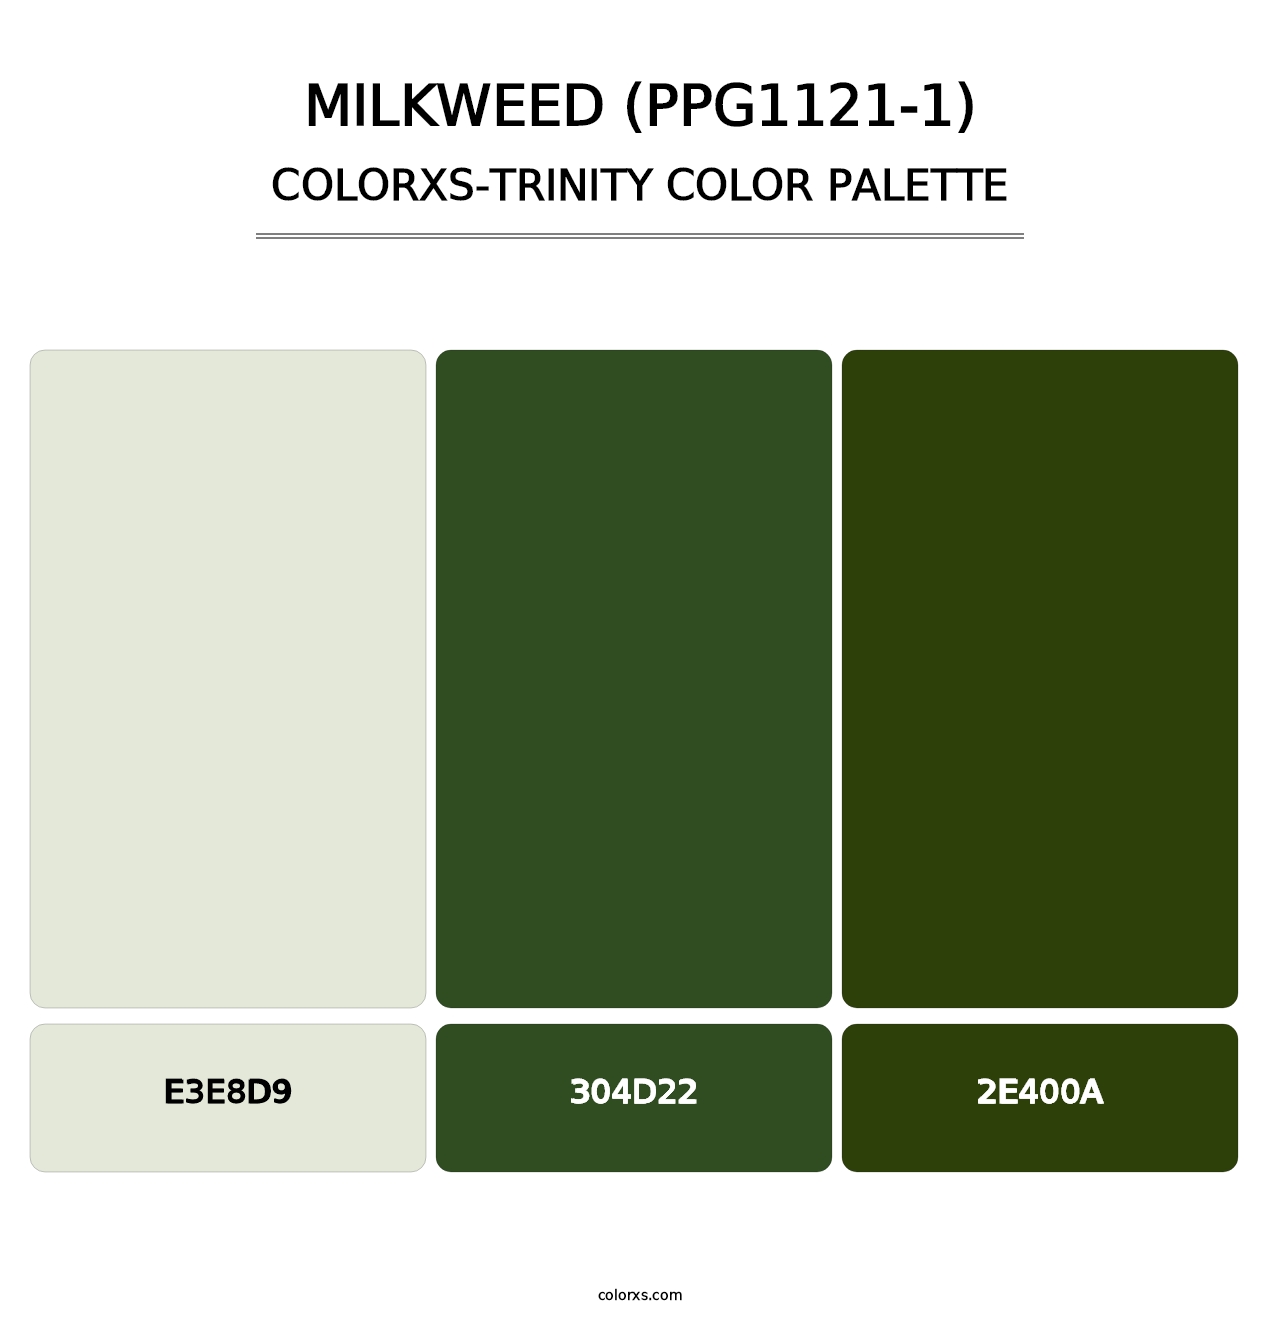 Milkweed (PPG1121-1) - Colorxs Trinity Palette